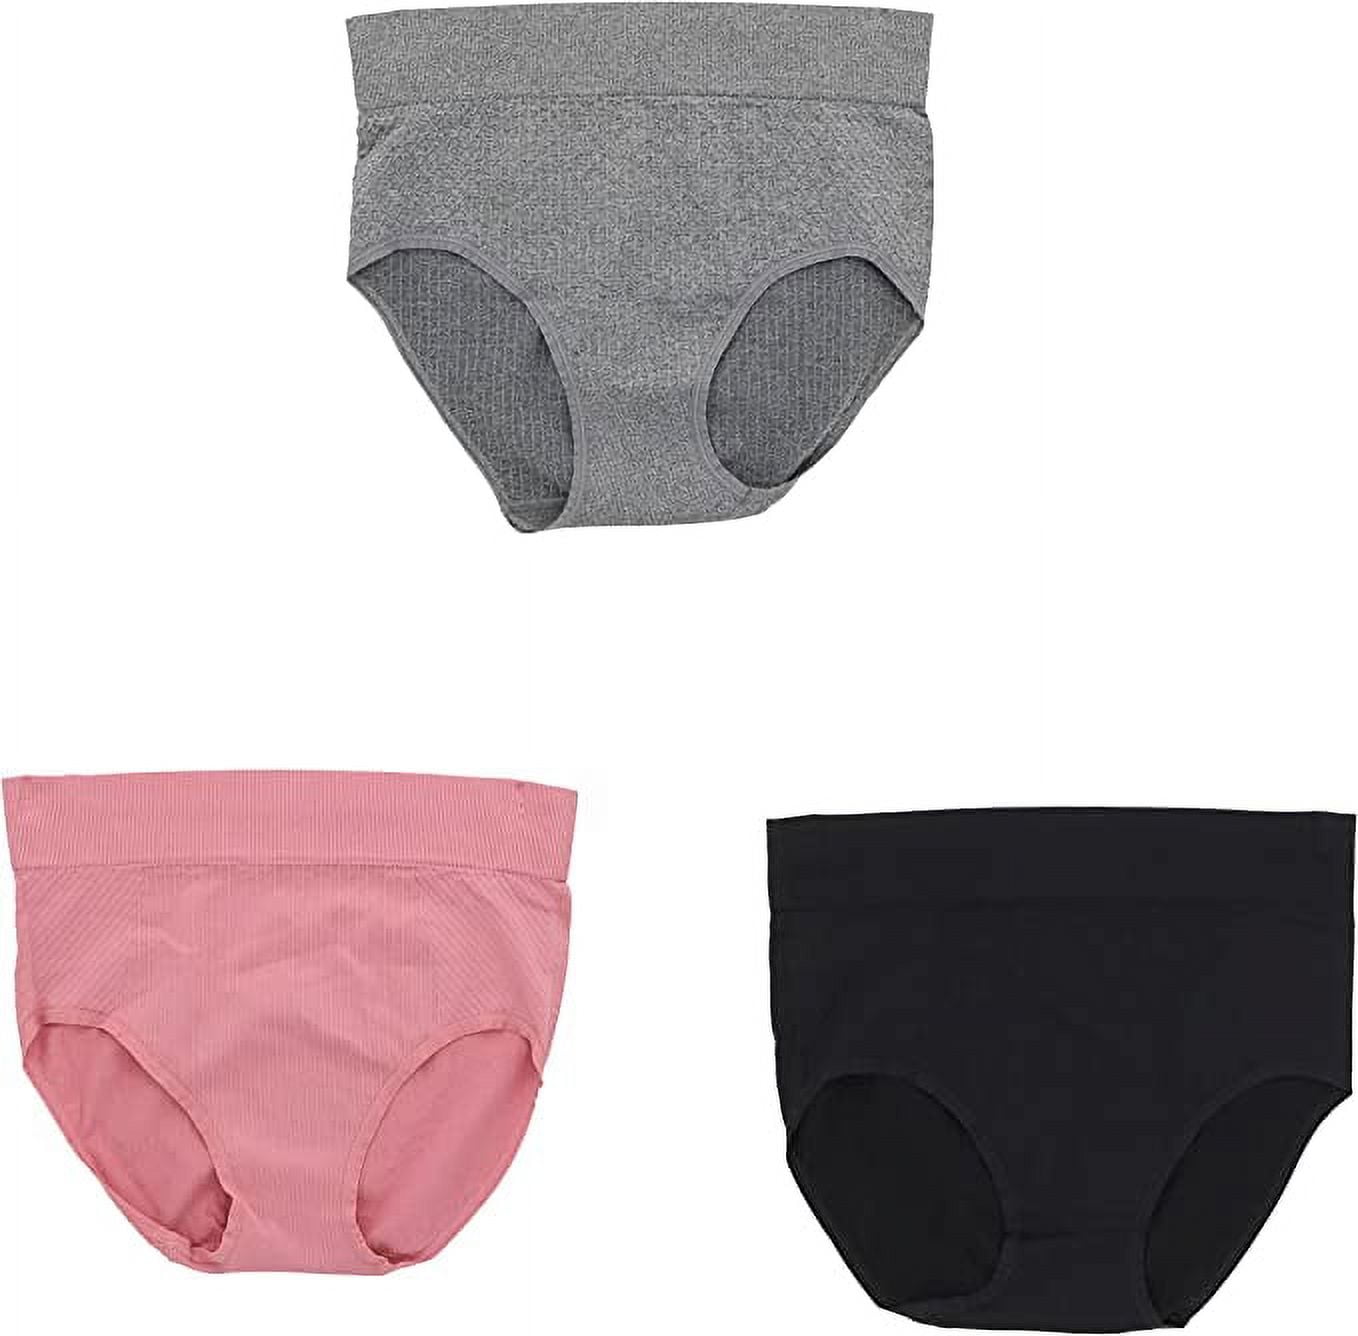 Delta Burke Intimates Women's Plus Size Ribbed Hi-Rise Brief Panties - 3  Pack - Black, Pink, & Charcoal - 1X-Large